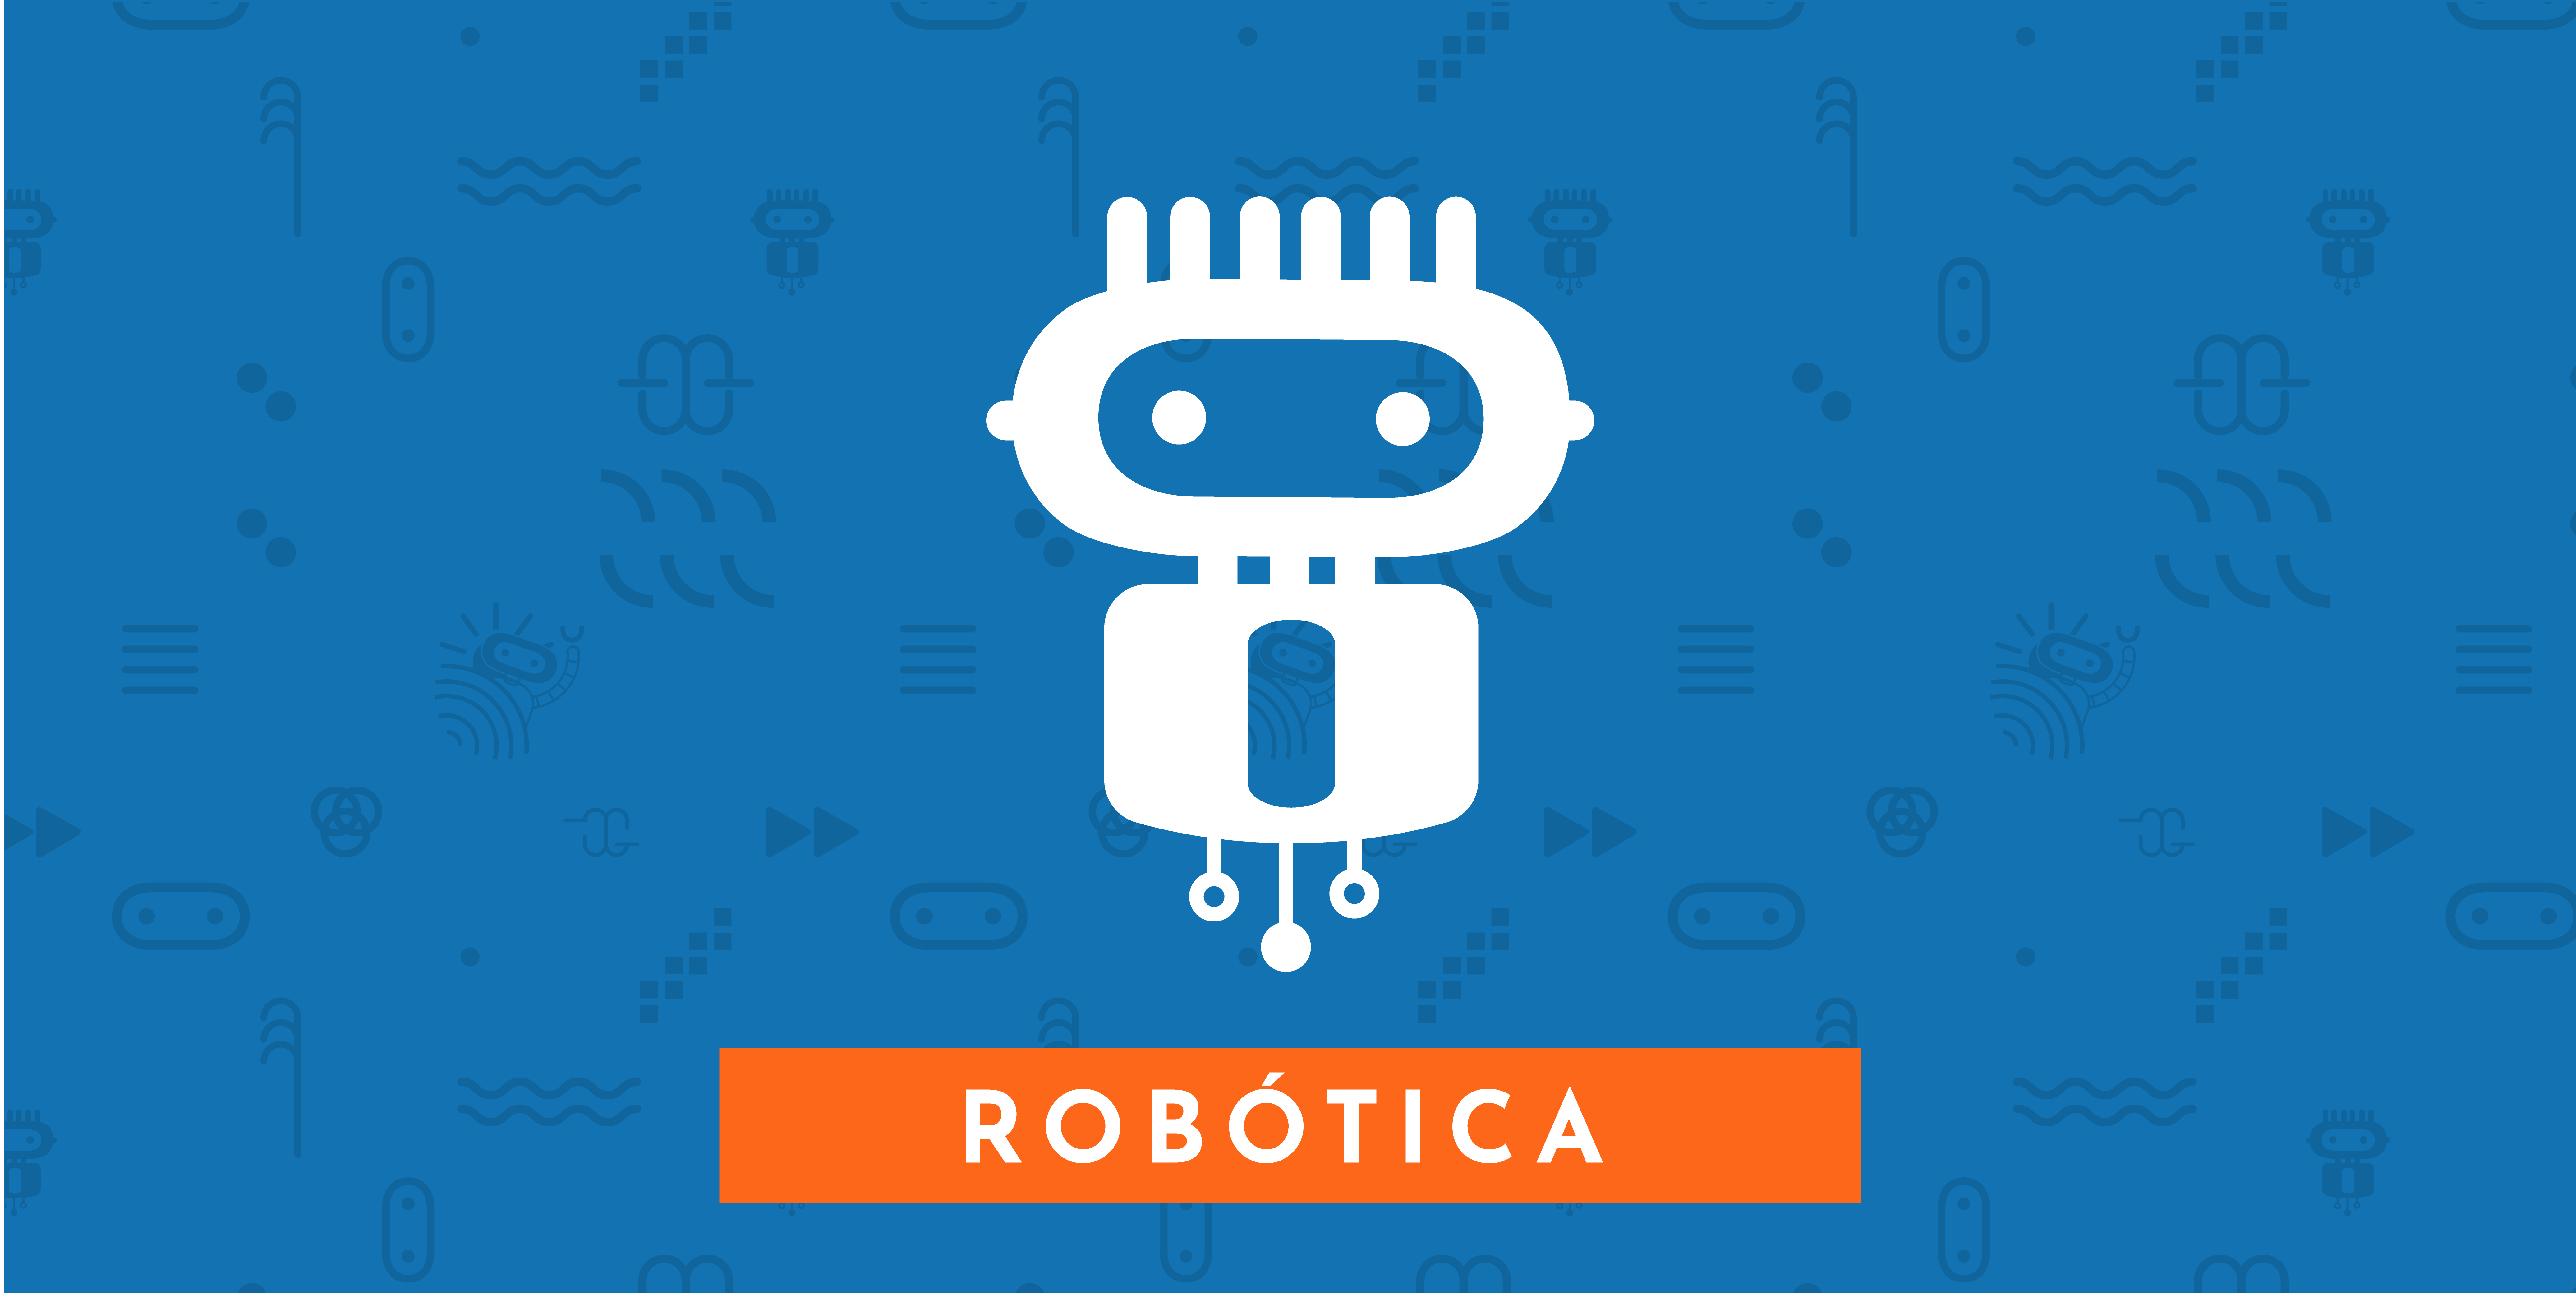 BITBOT - Sistemas Robóticos con un enfoque de Educación 4.0